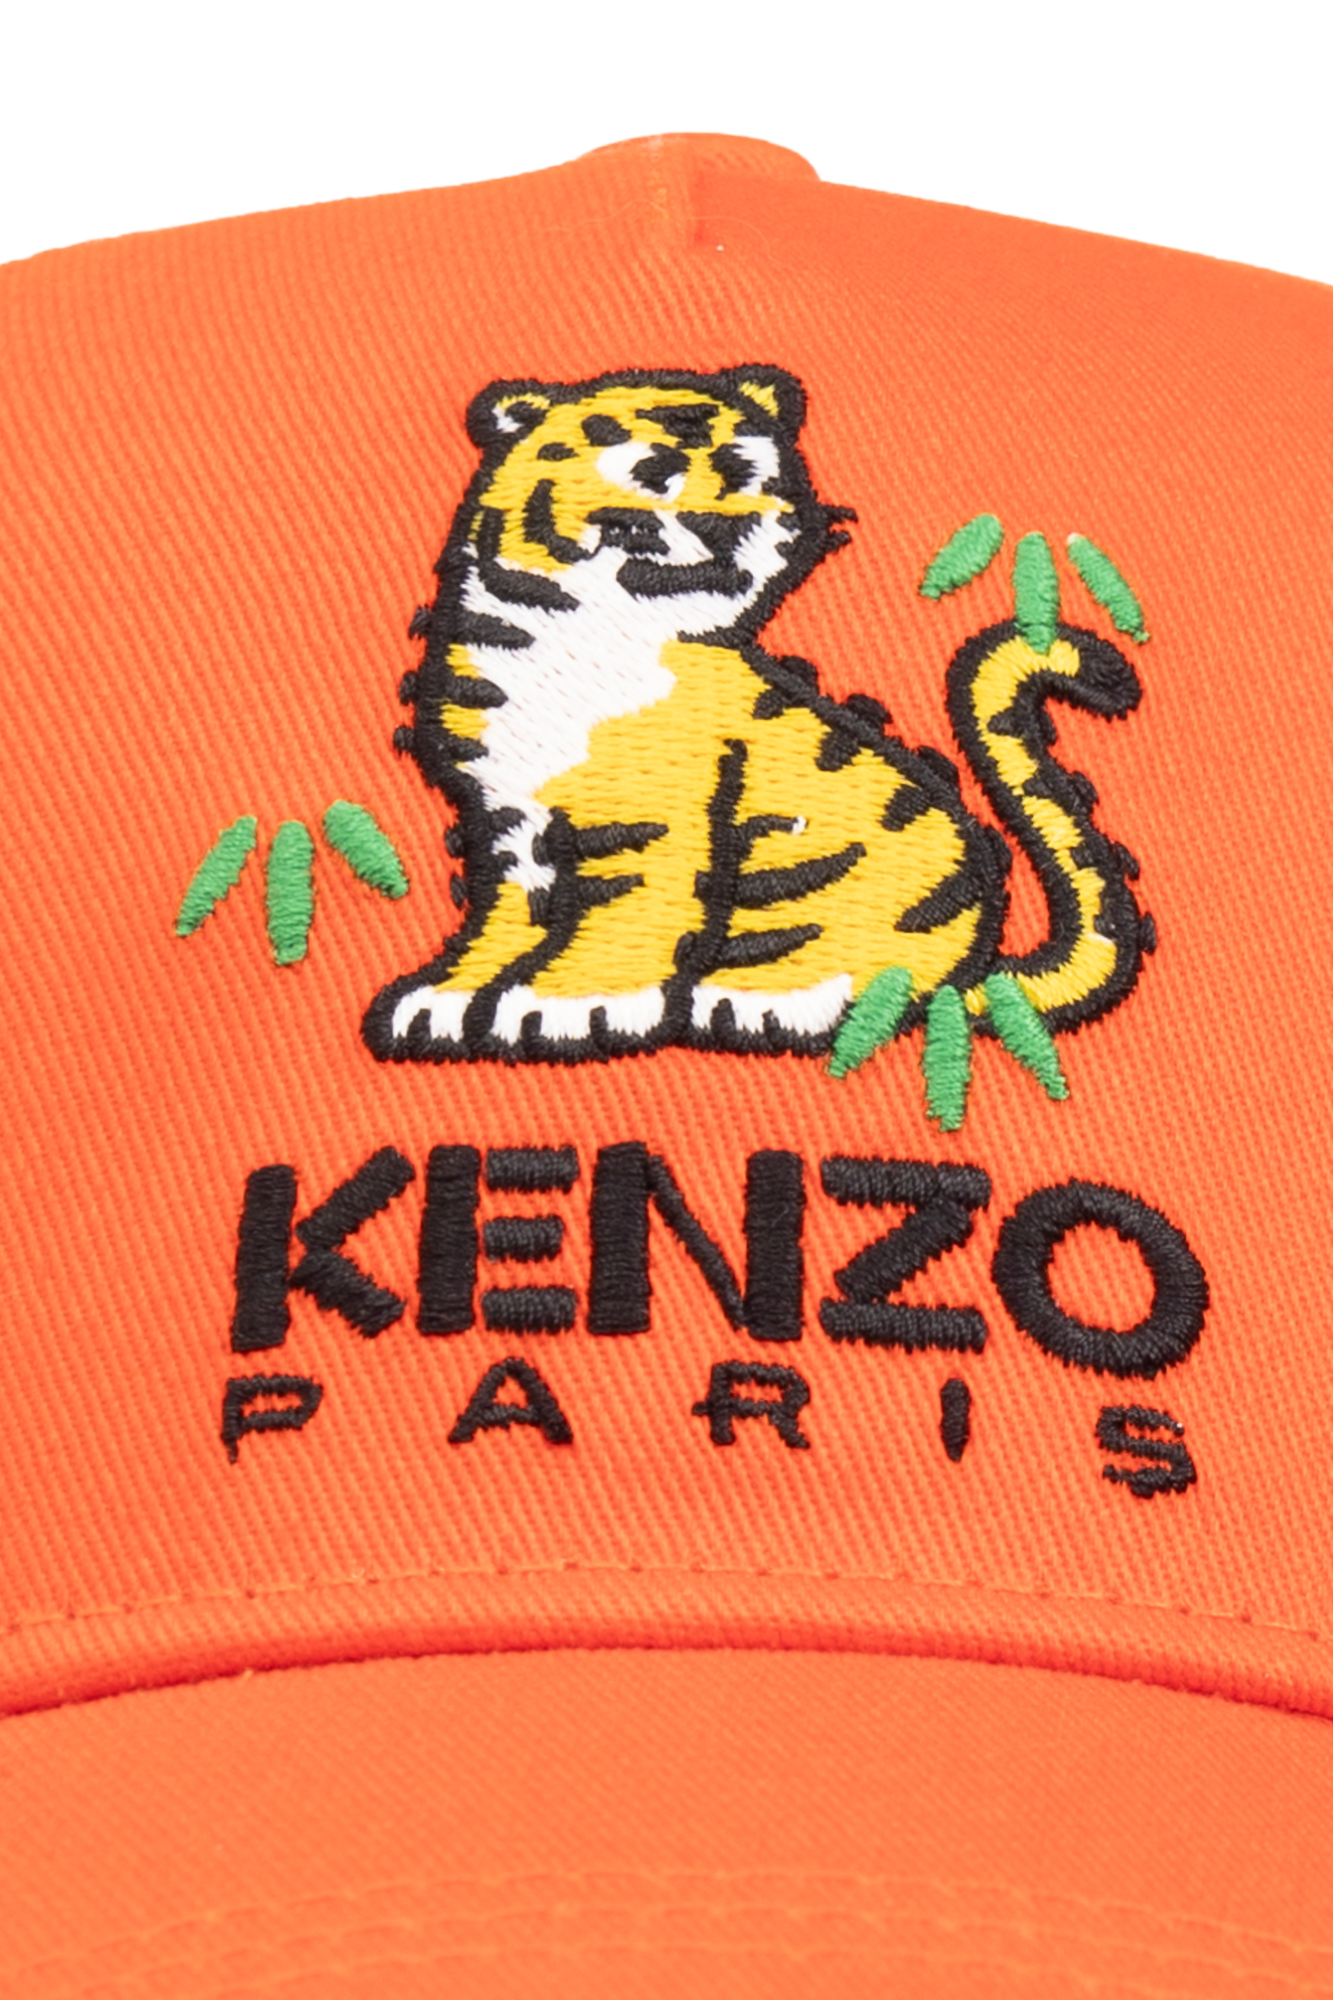 Kenzo Kids Kids logo embroidered beanie hat Black